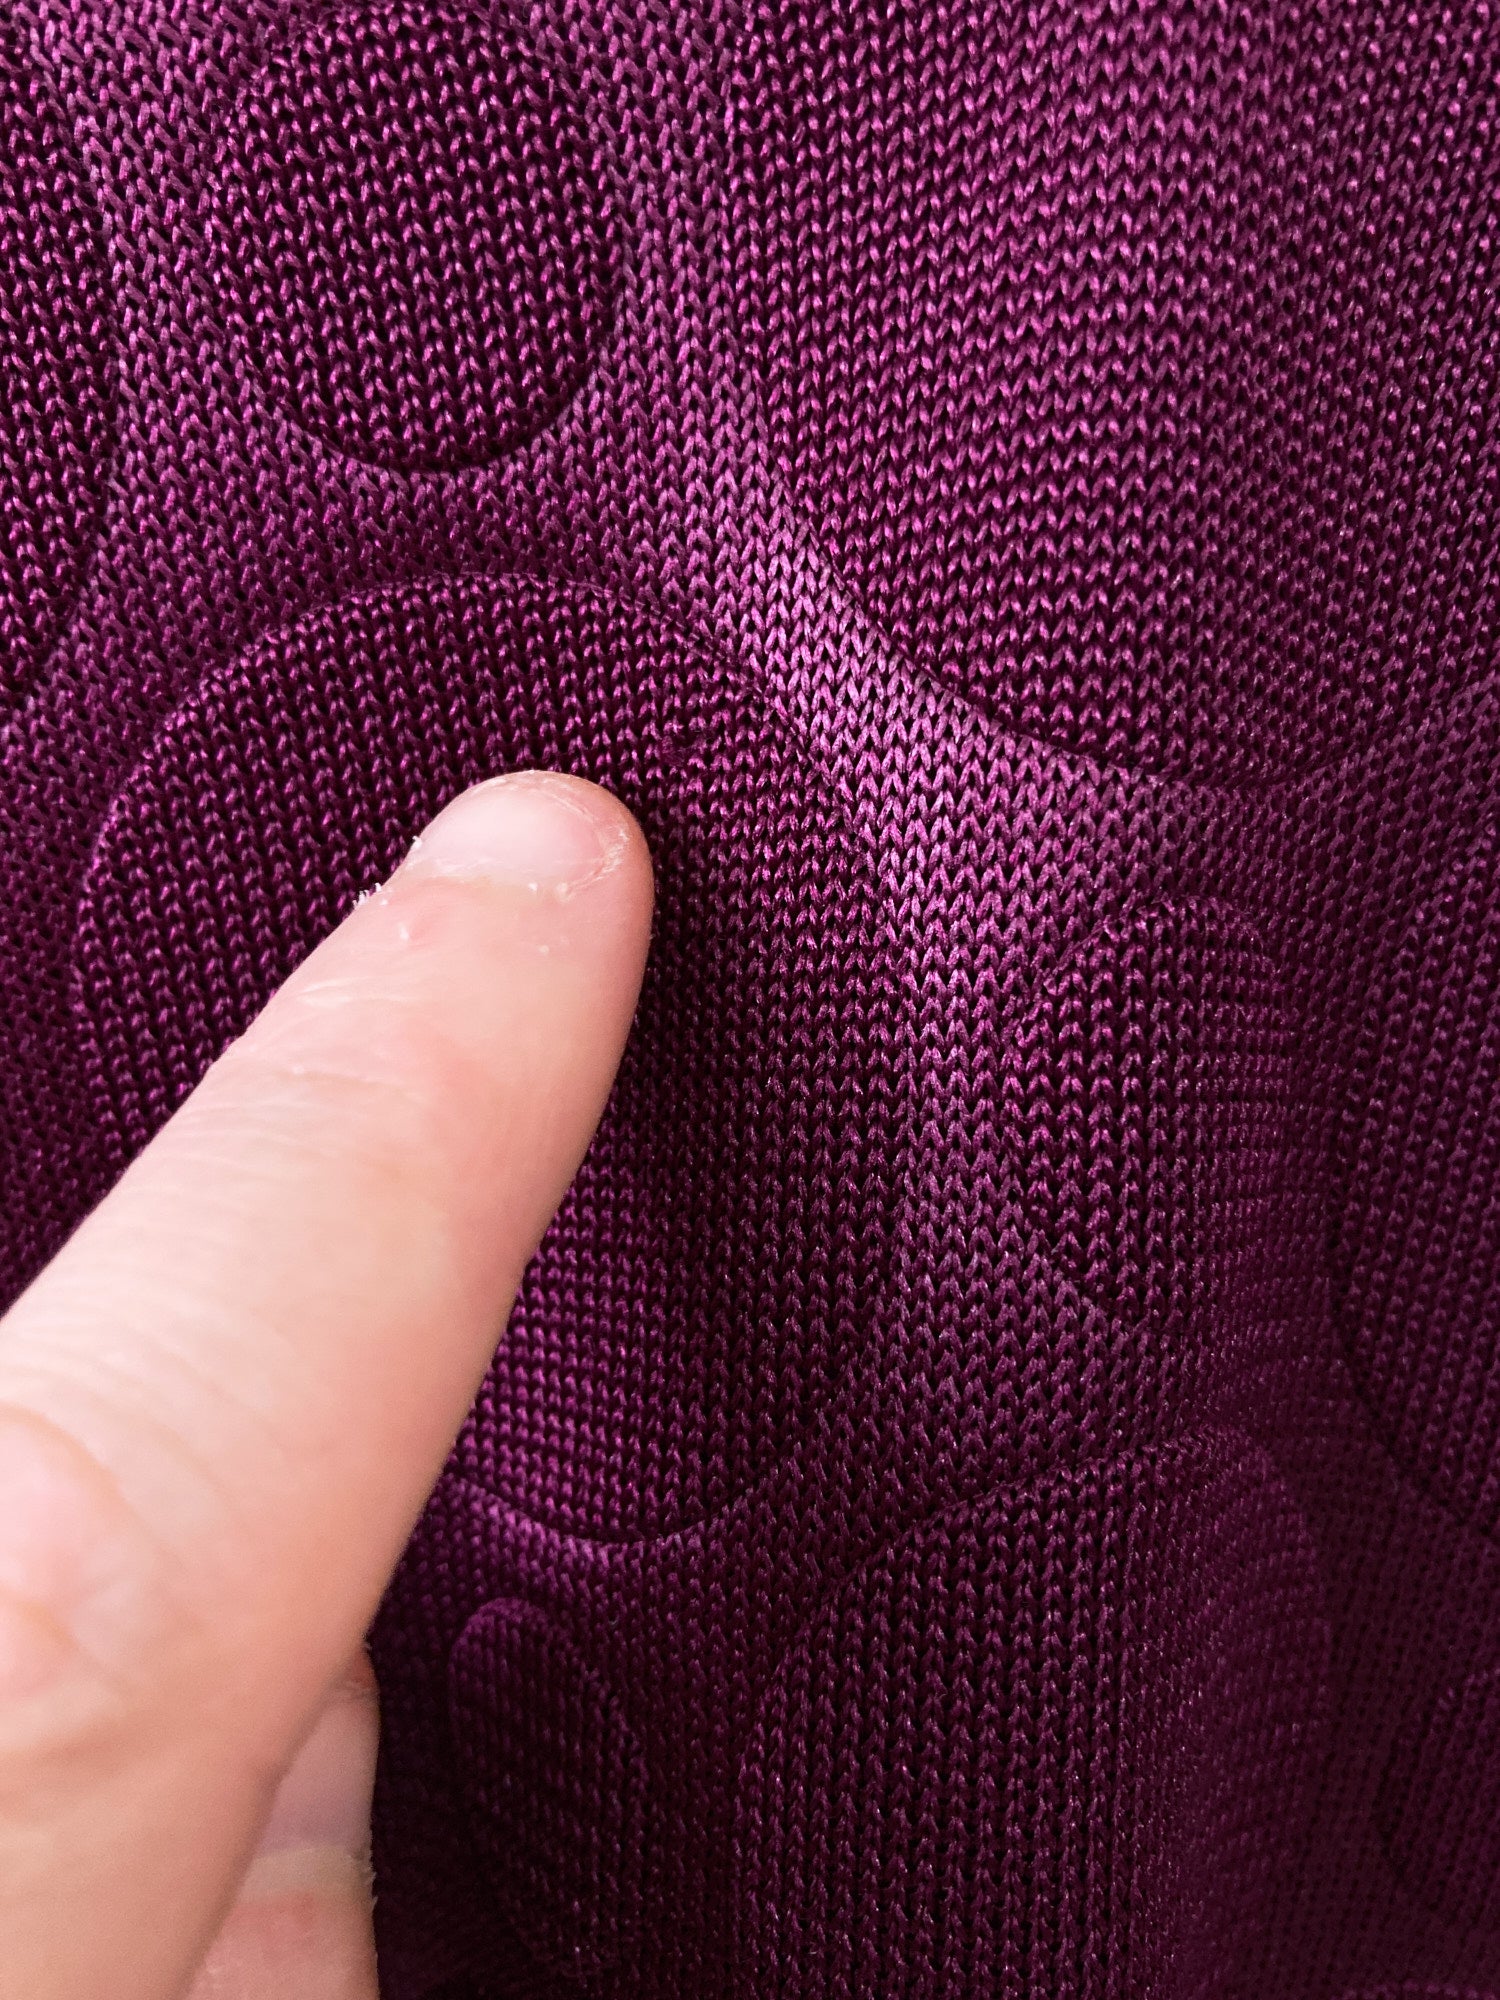 Comme des Garcons 1999 purple polyester knit circle pattern v neck t-shirt - S